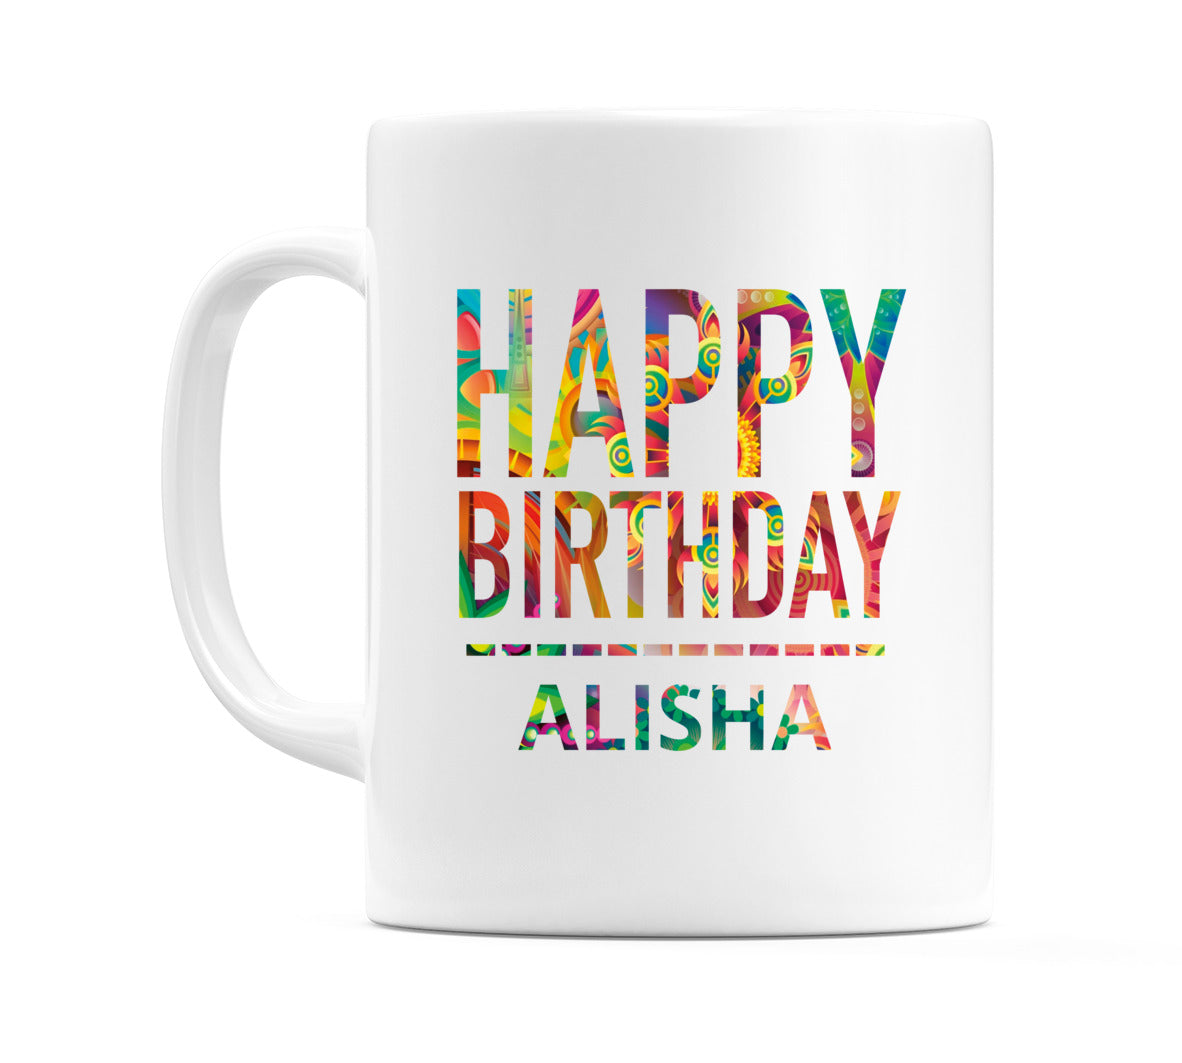 Happy Birthday Alisha (Tie Dye Effect) Mug Cup by WeDoMugs